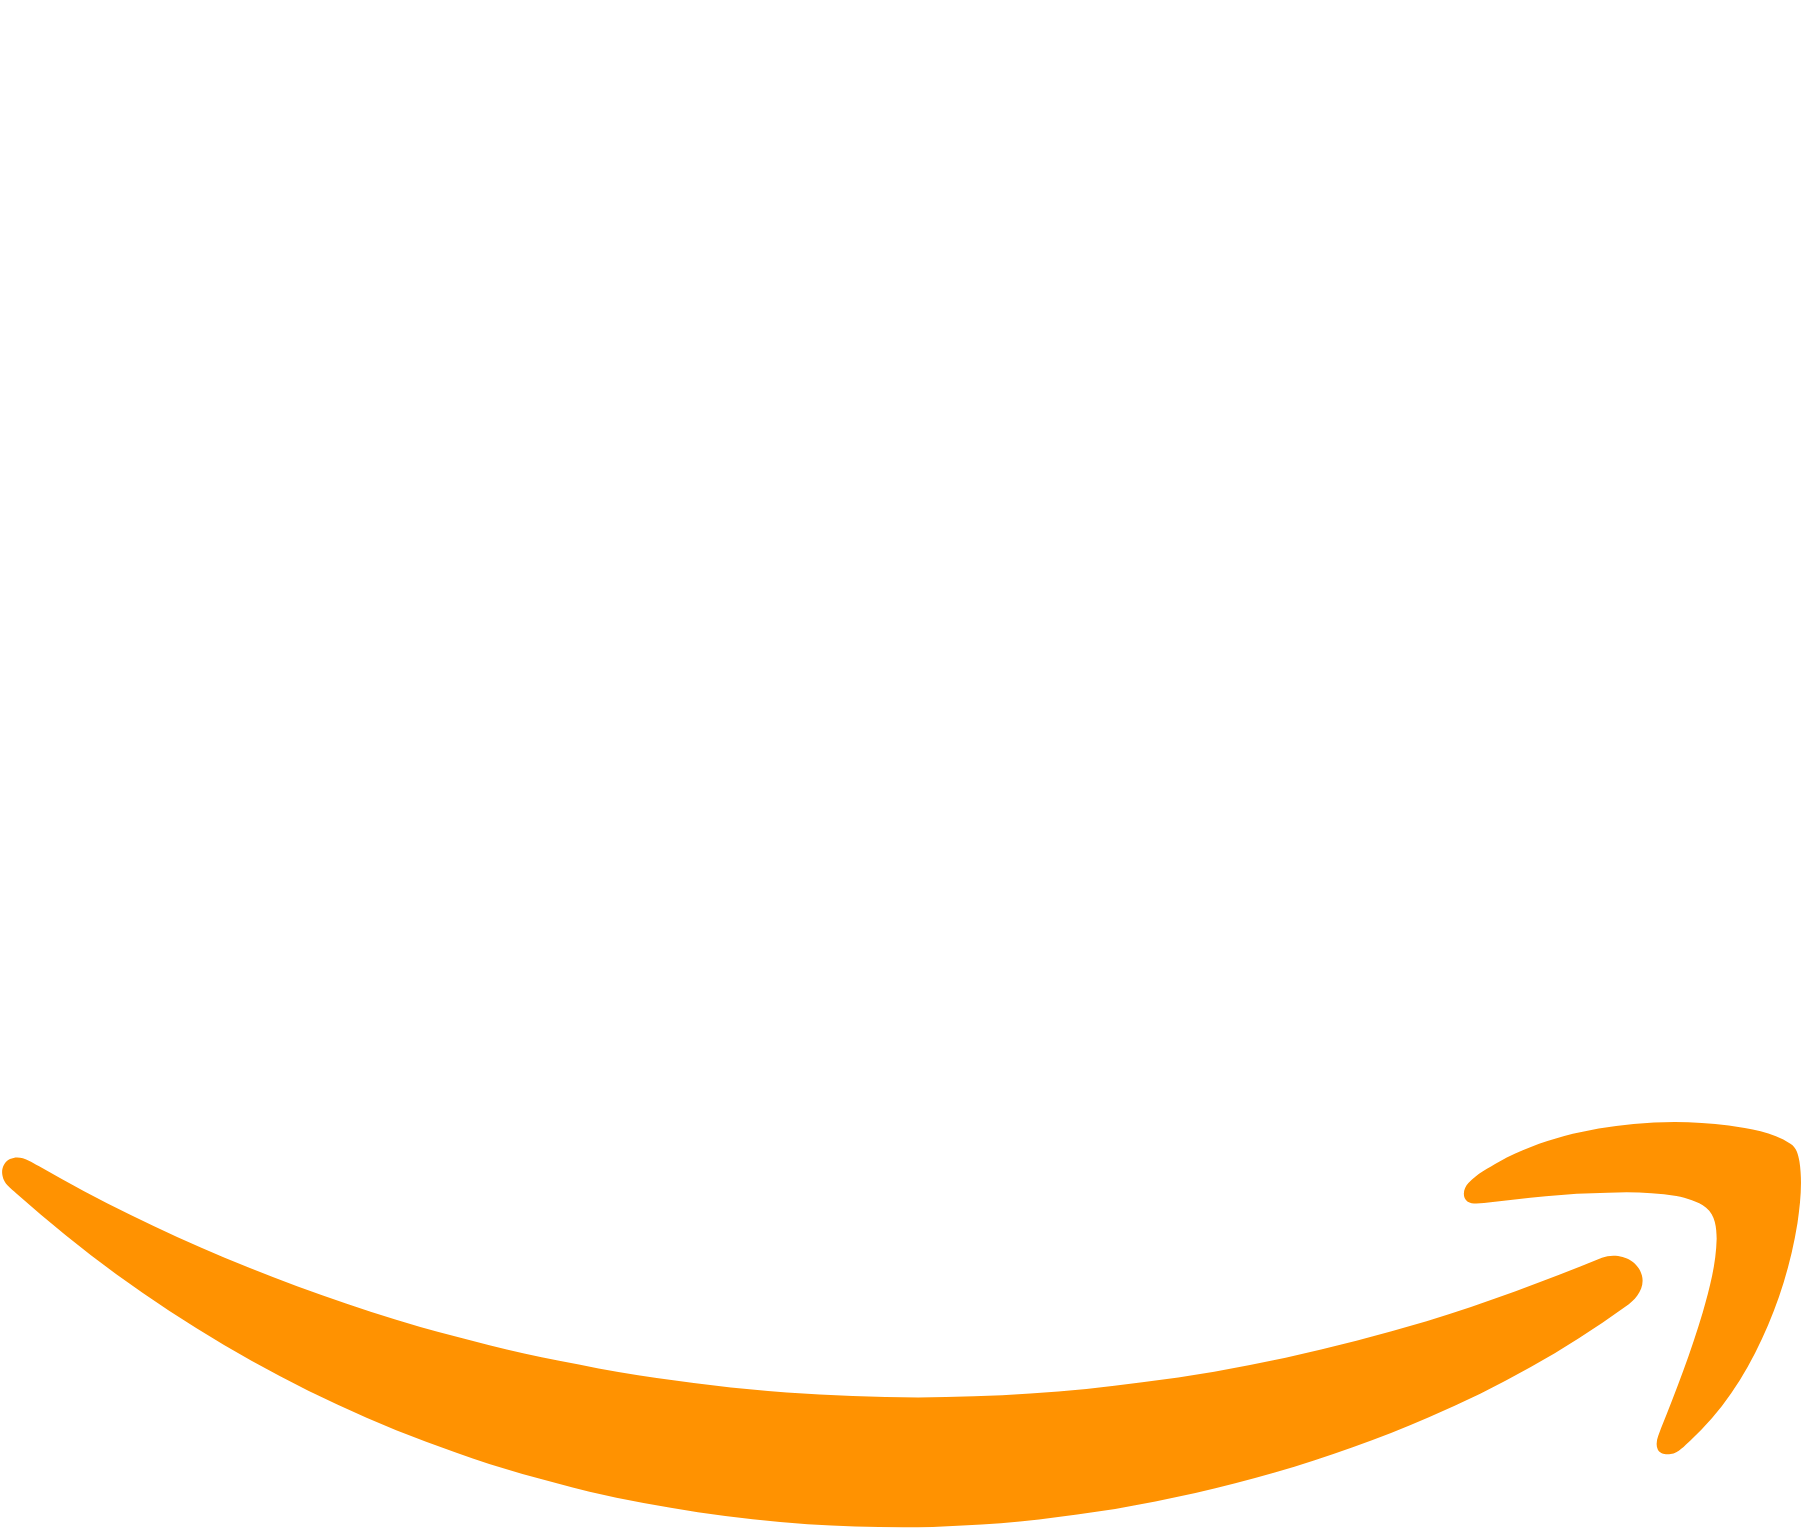 Amazon logo for dark backgrounds (transparent PNG)